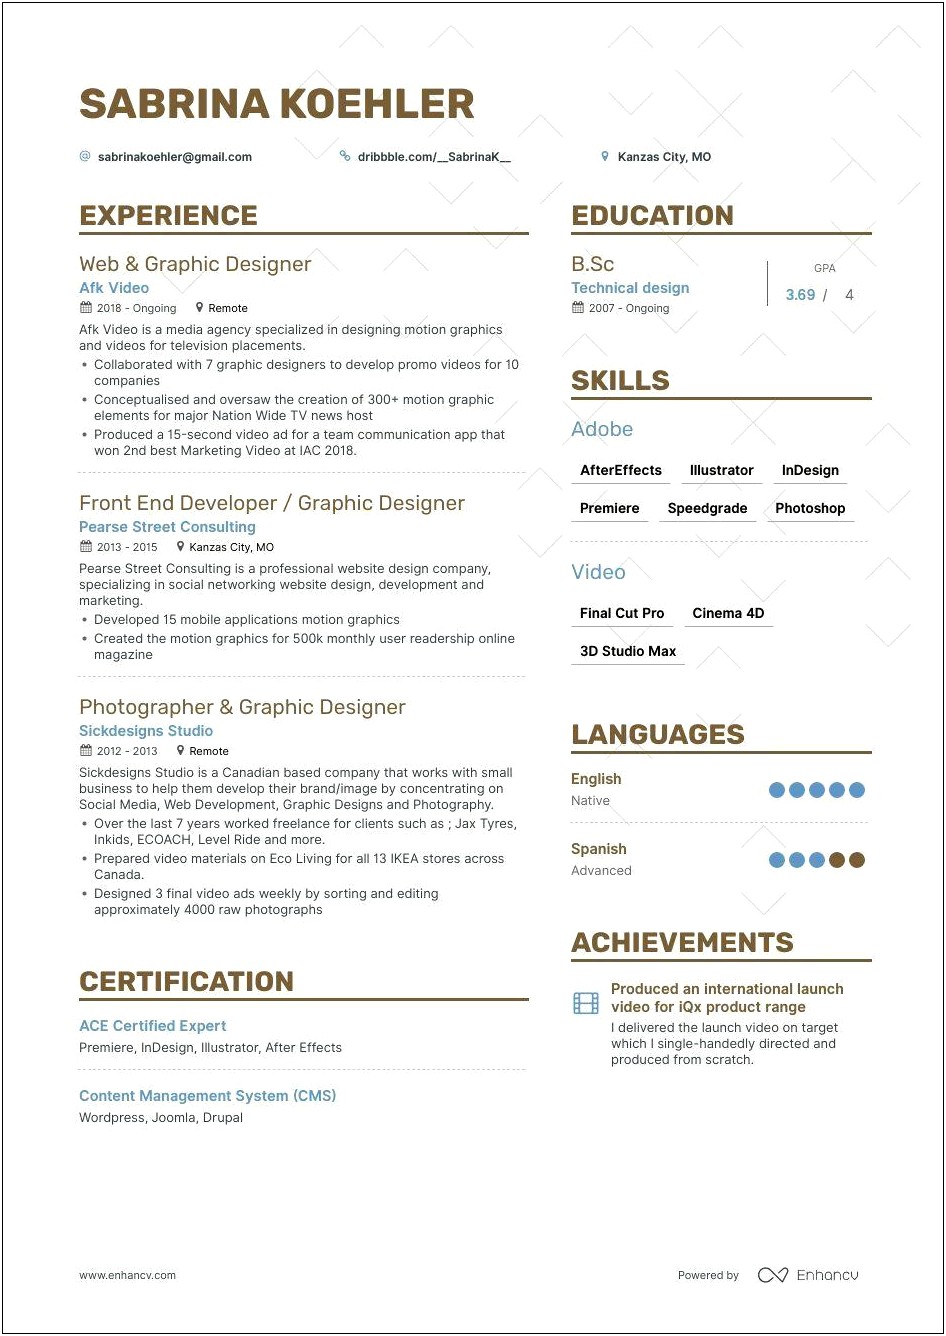 Graphic Designer Listing Skills On Resume